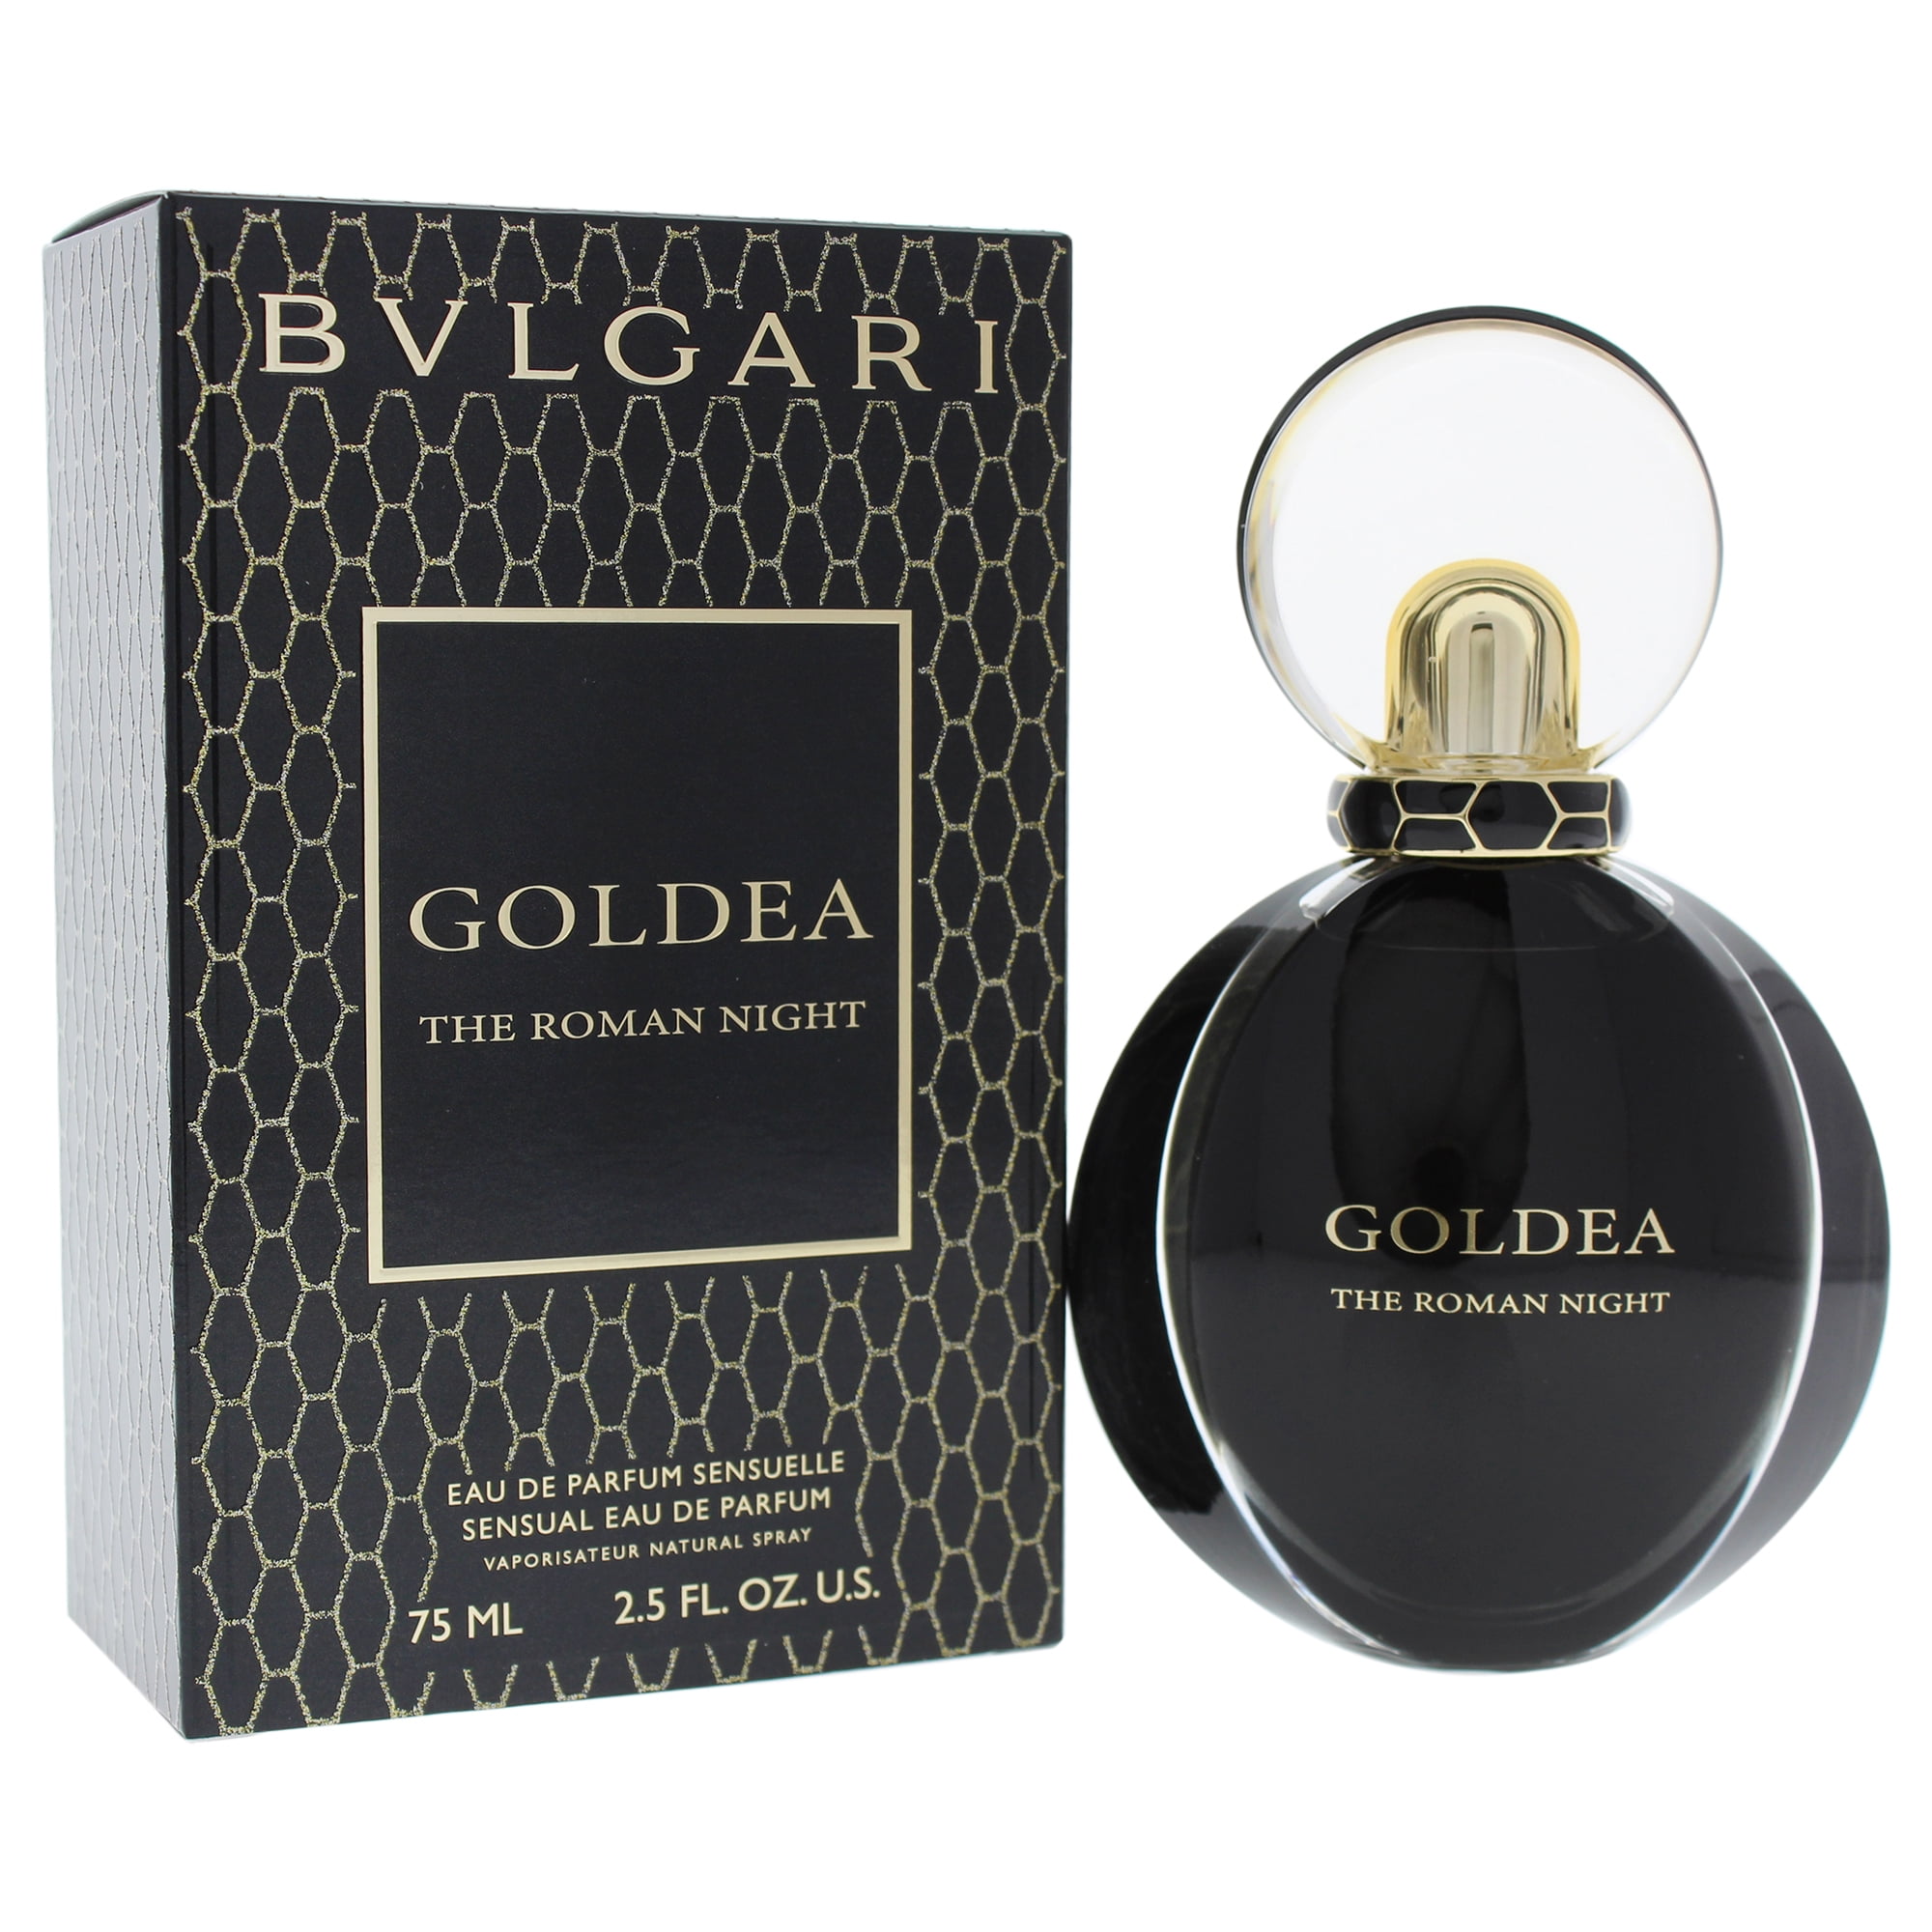 bvlgari goldea the roman night eau de parfum sensuelle